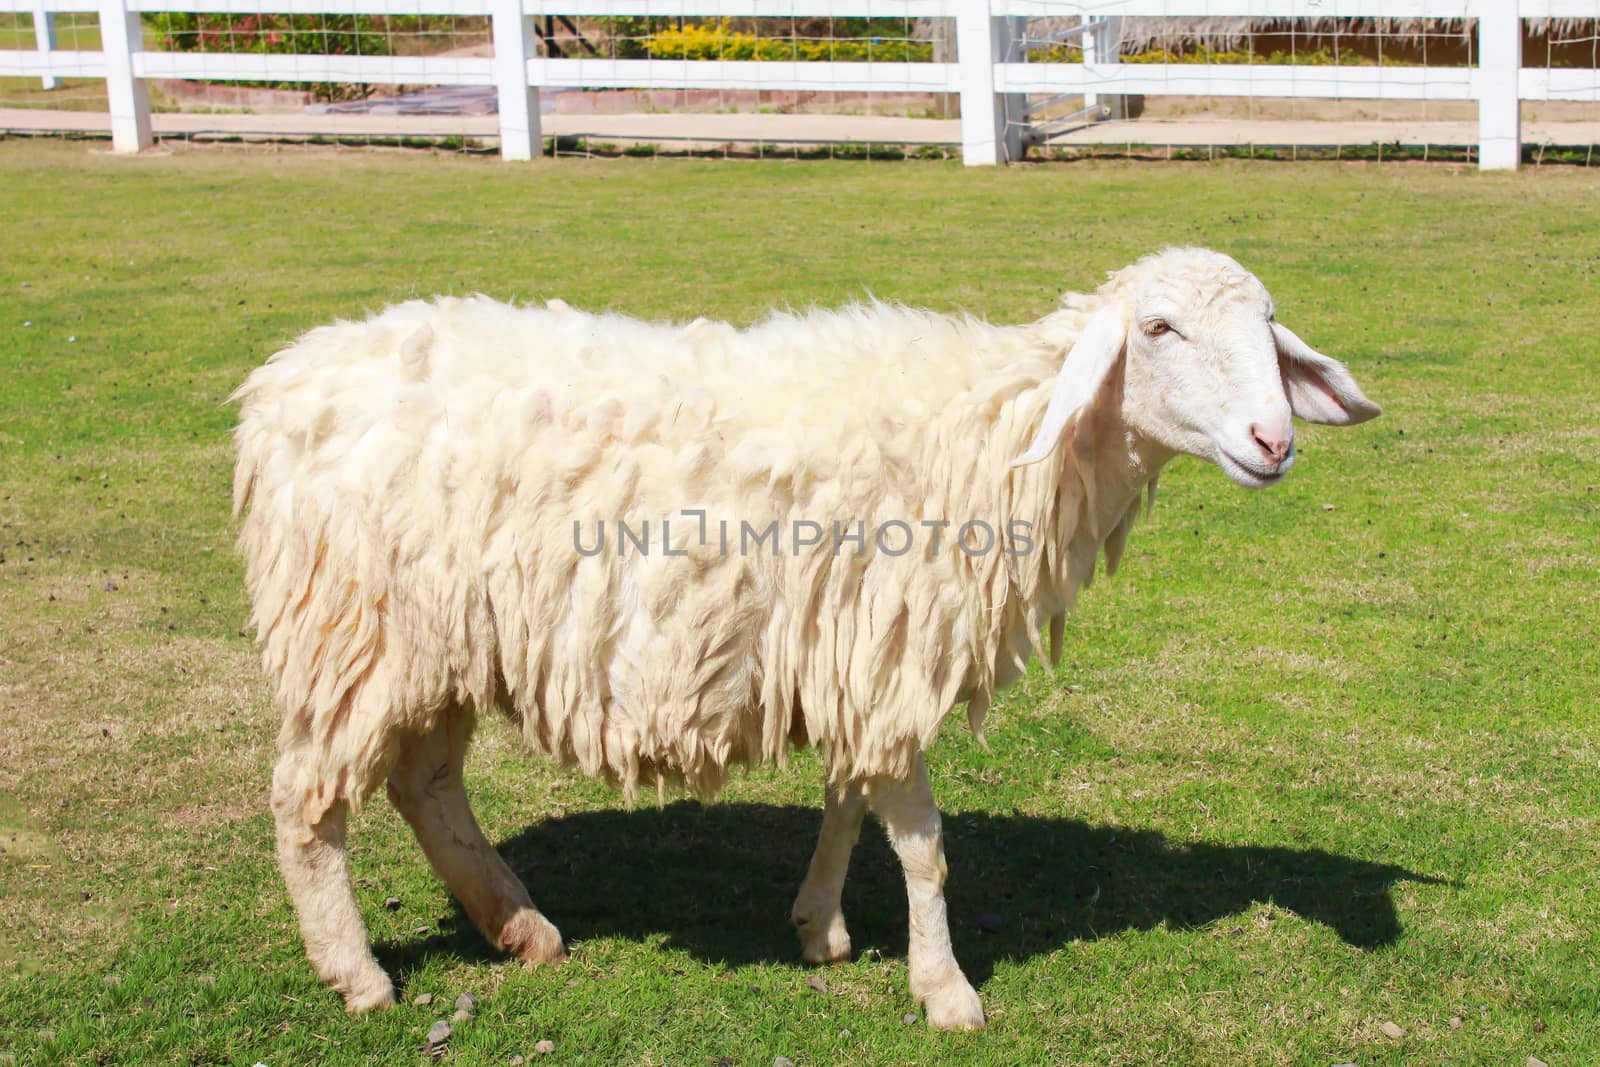 Sheep in farm field by powerbeephoto